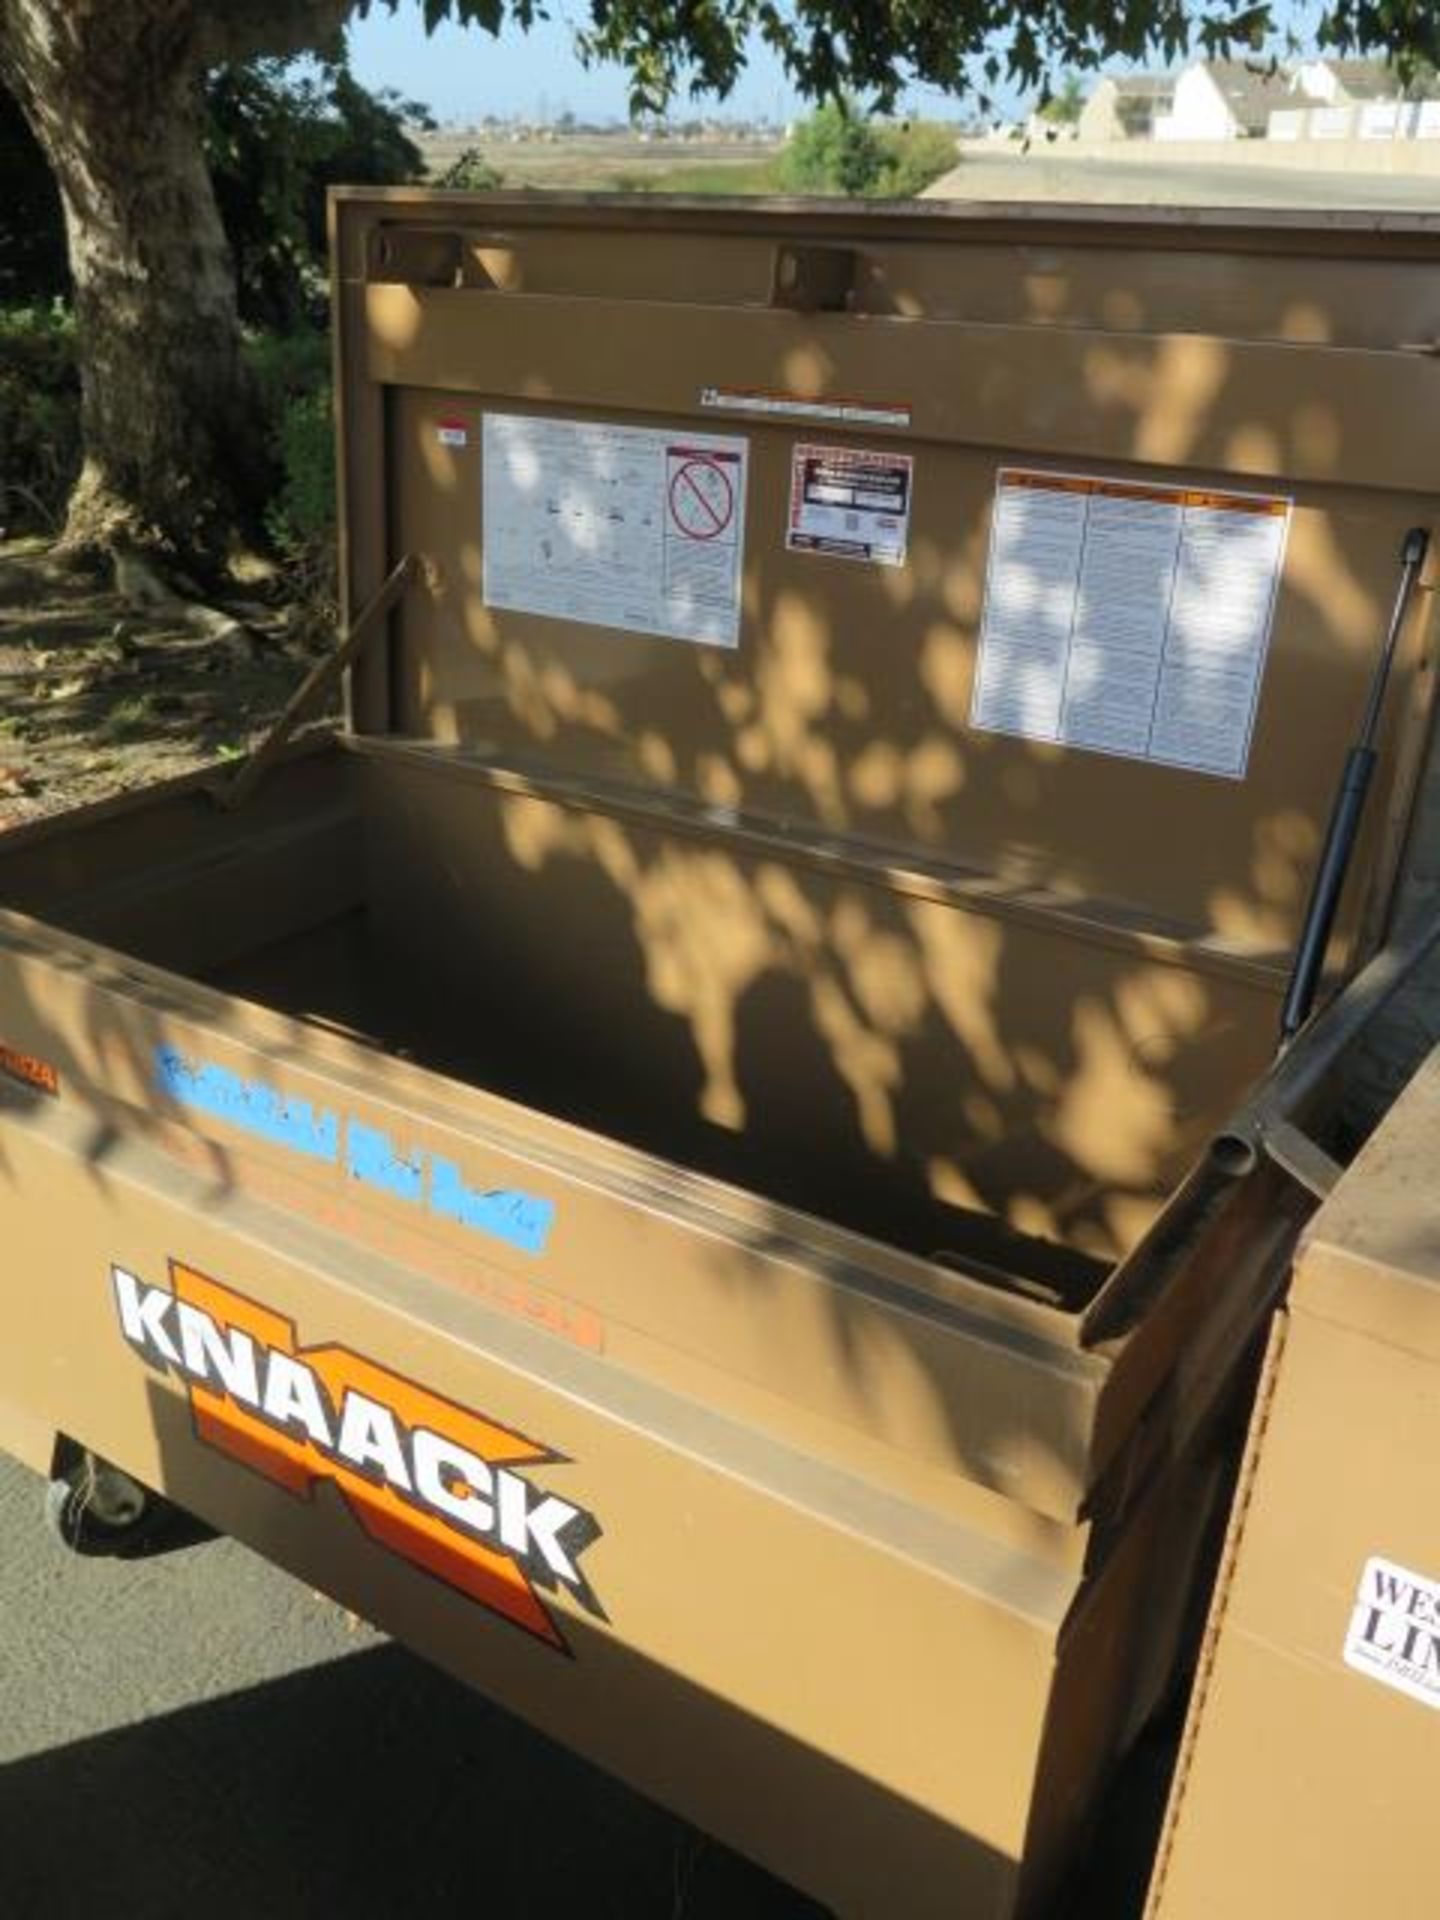 Knaack mdl. 4824 Rolling Job Box (SOLD AS-IS - NO WARRANTY) - Image 4 of 7